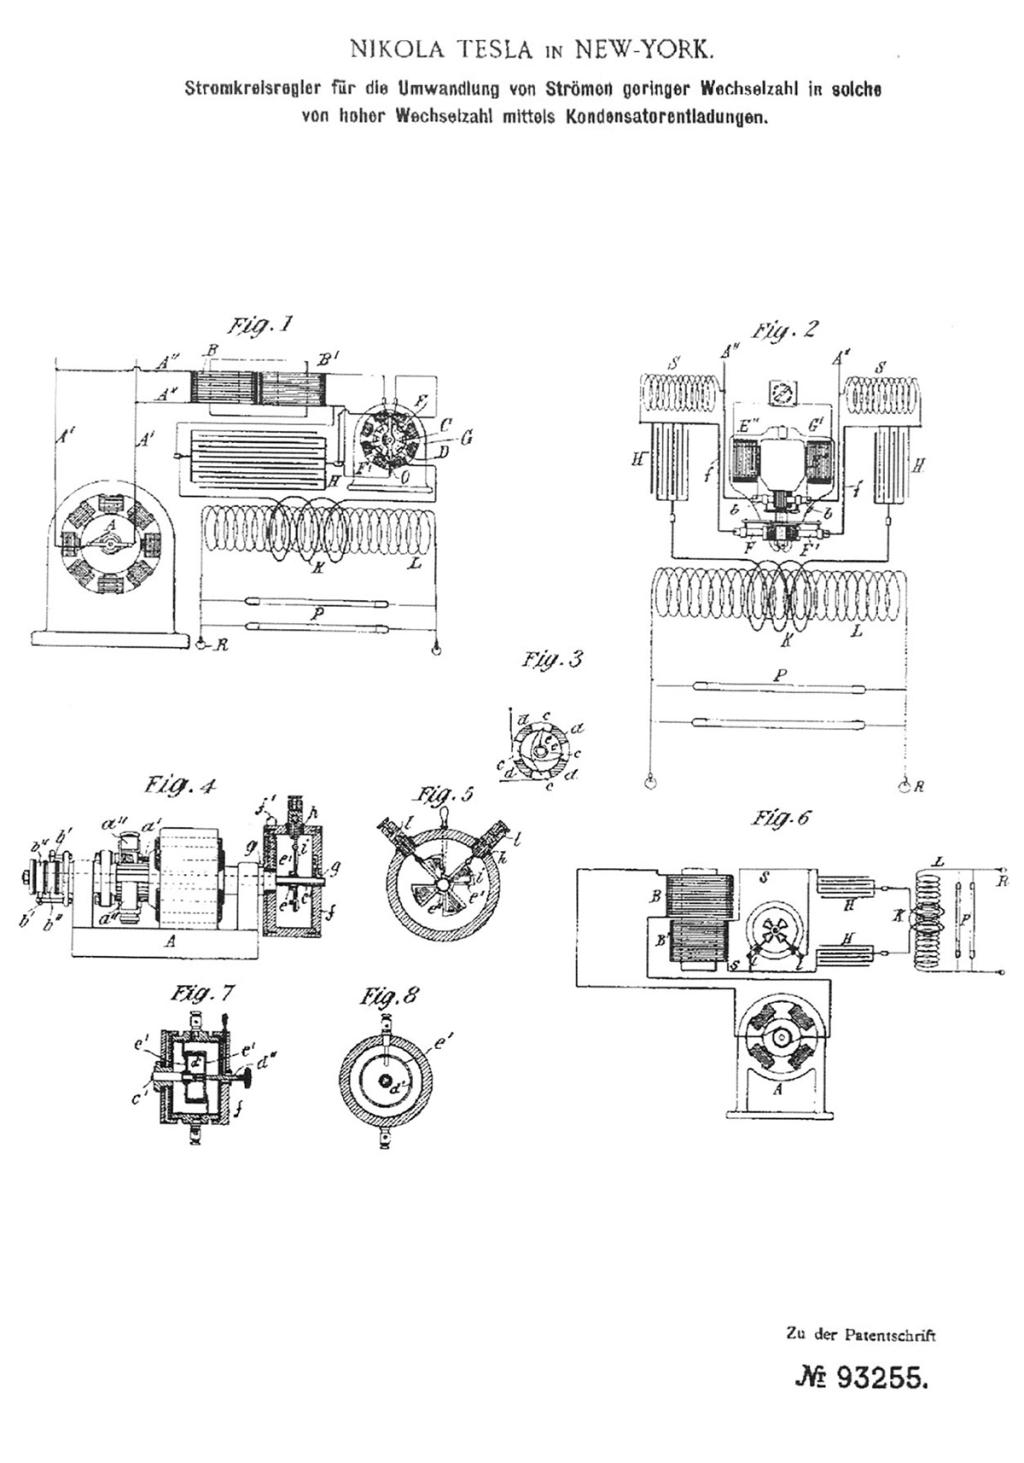 German Patent 93255 - Image 1.